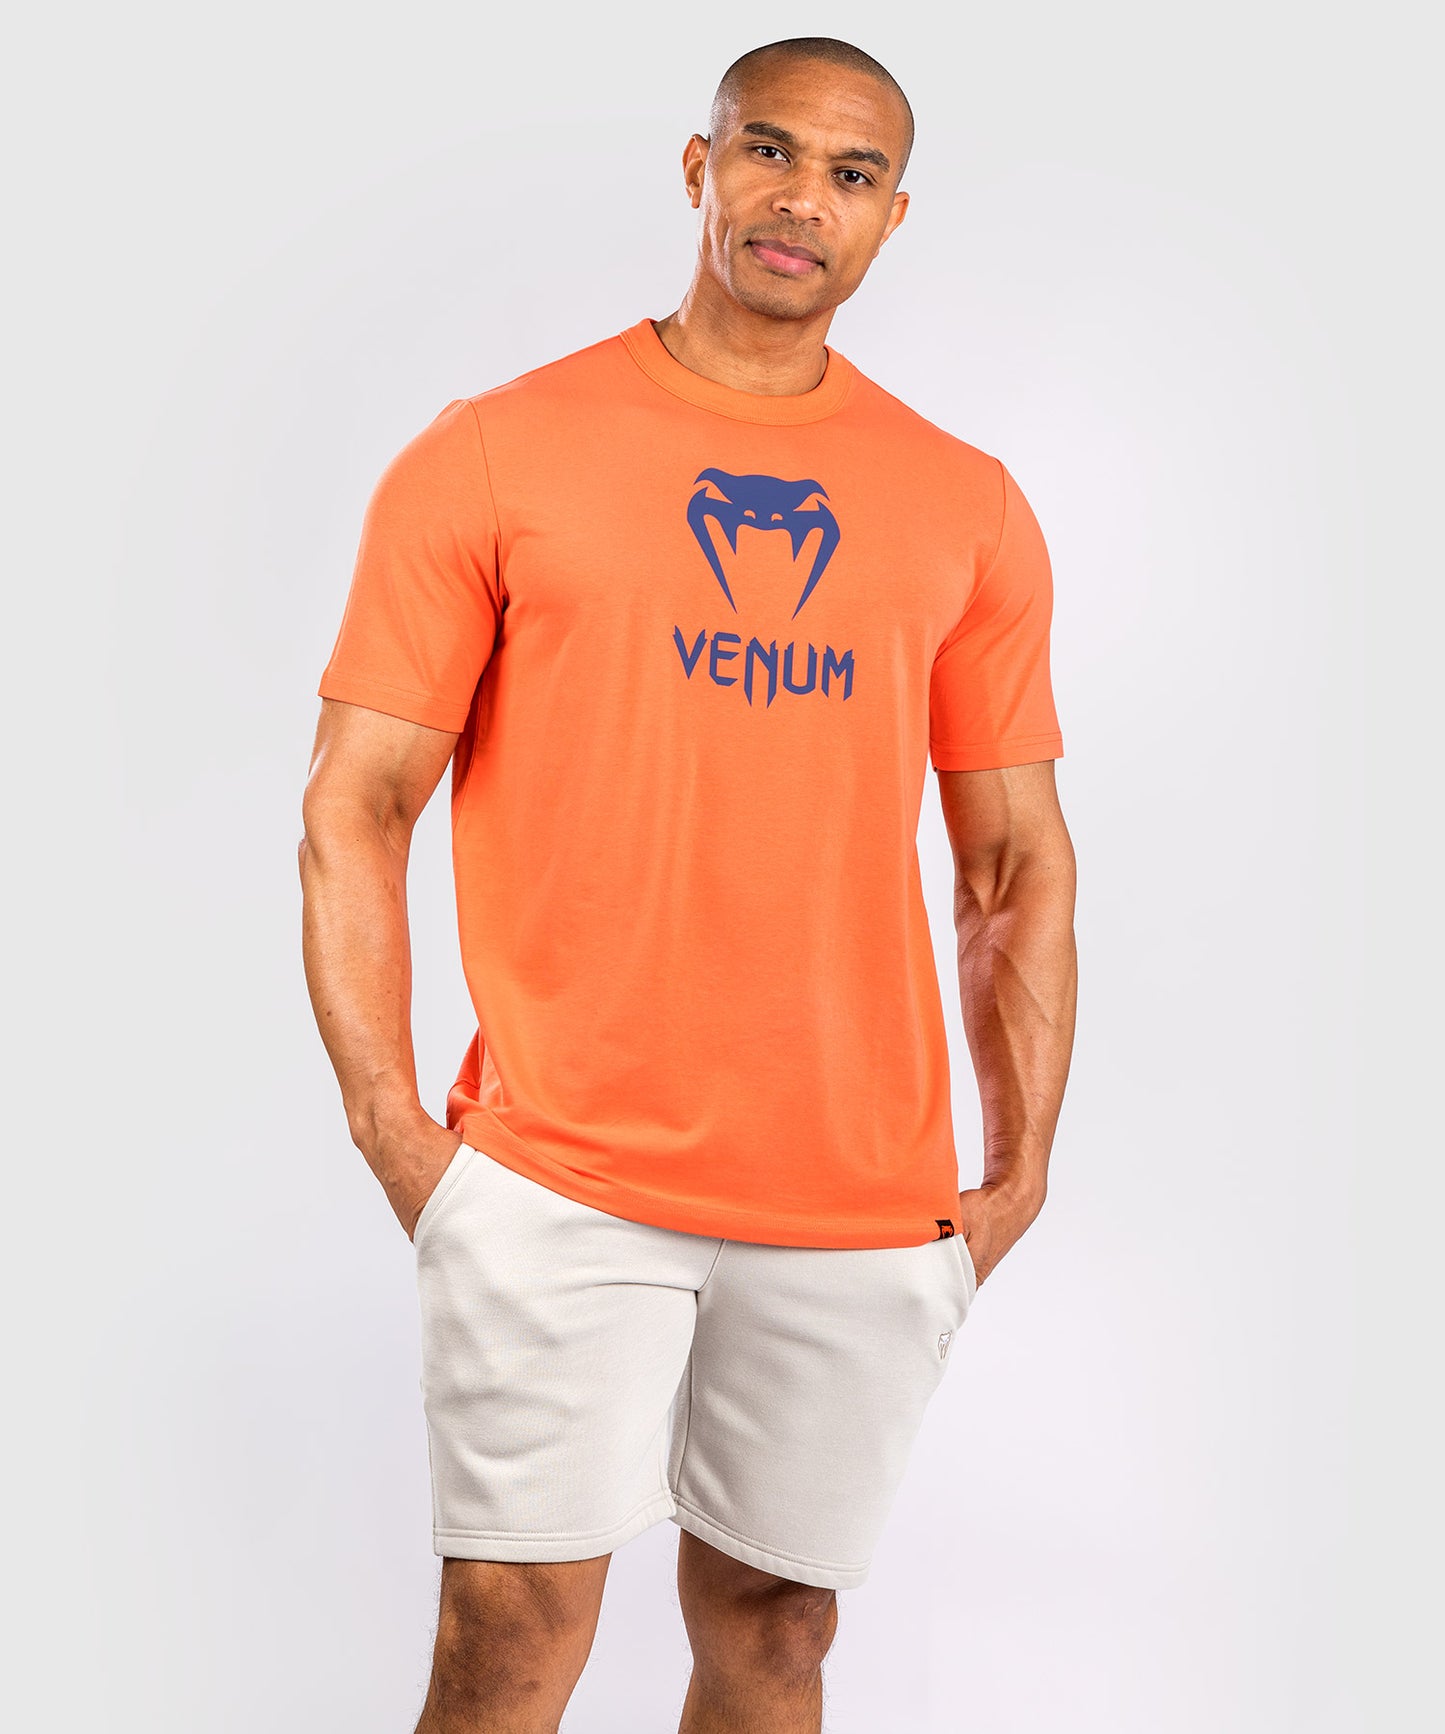 Venum Classic T-Shirt - Orange/Navy Blue